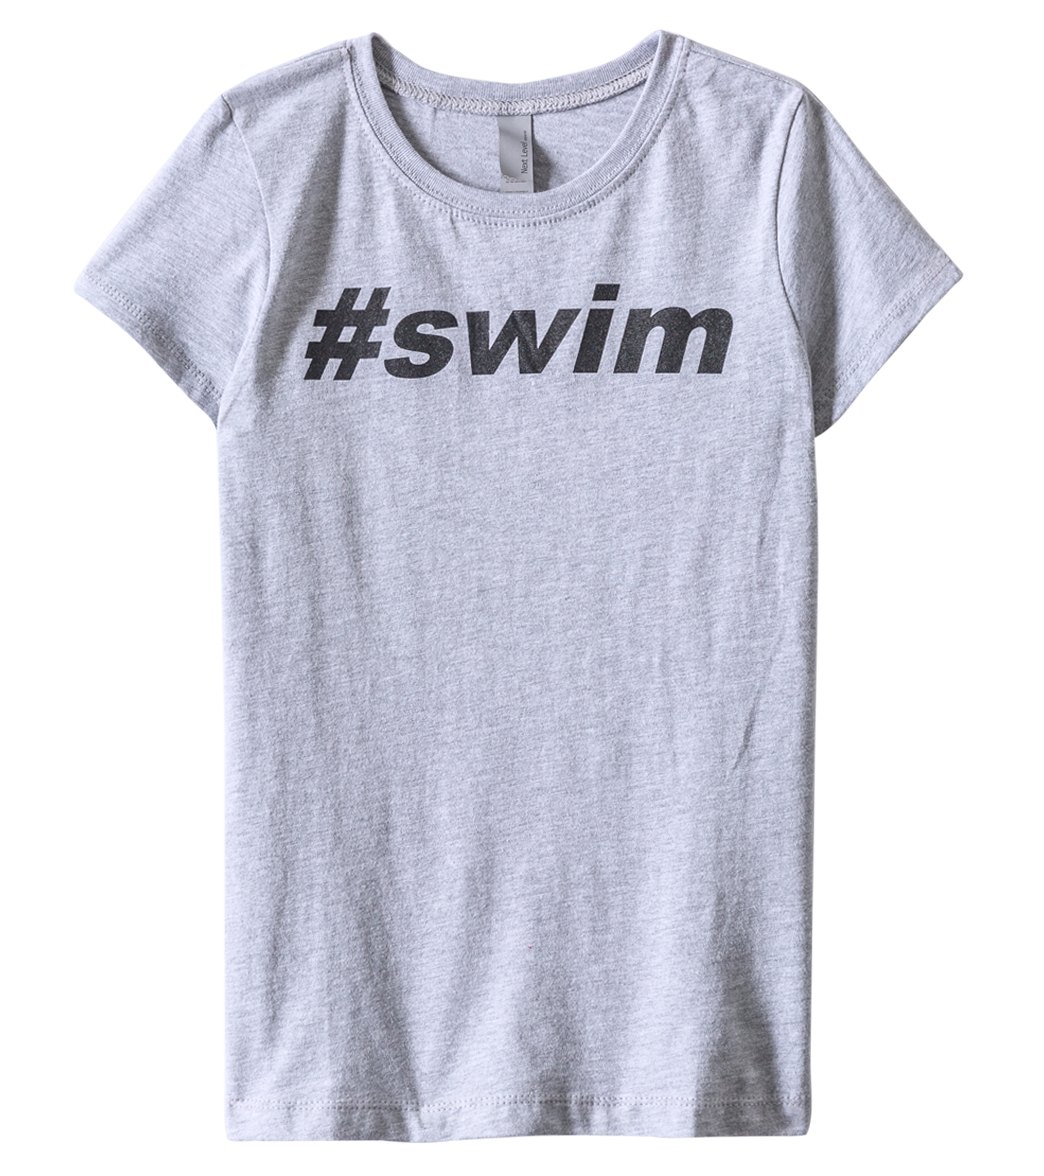 Ambro Manufacturing Girls' #swim Tee Shirt - Grey Small Cotton - Swimoutlet.com